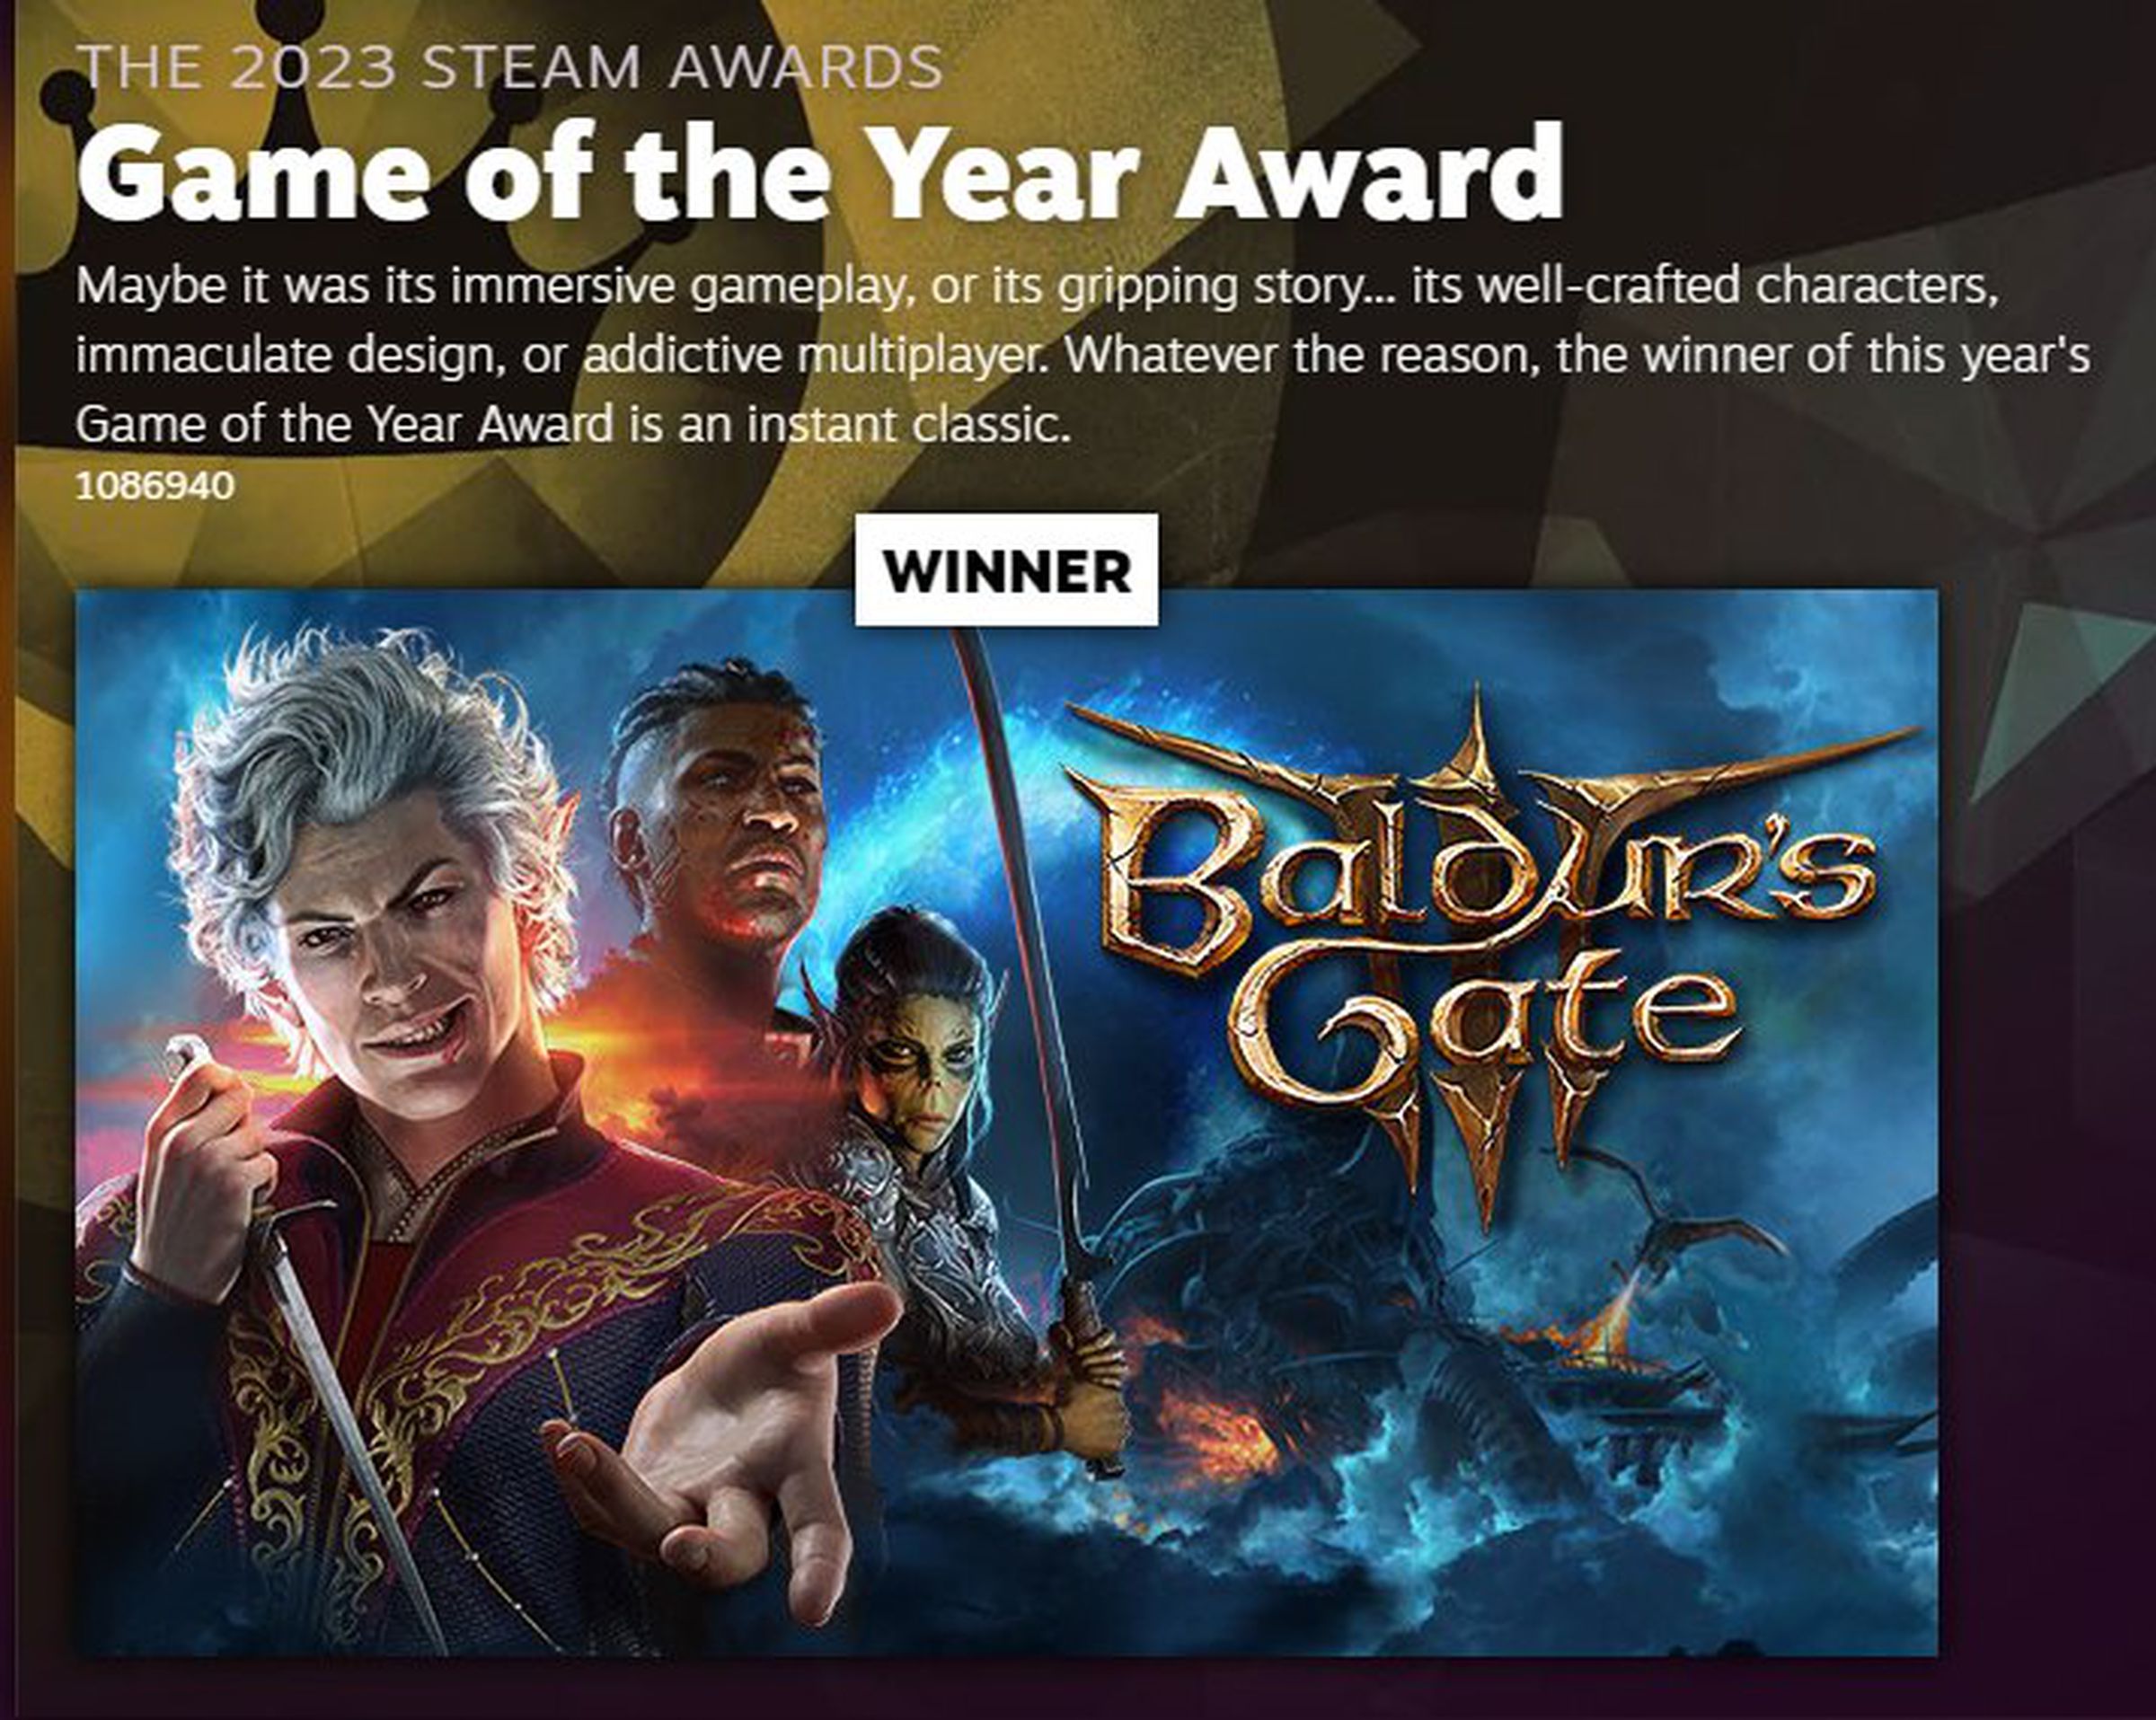 Game of the Year Award winner Baldur’s Gate featured on Steam.